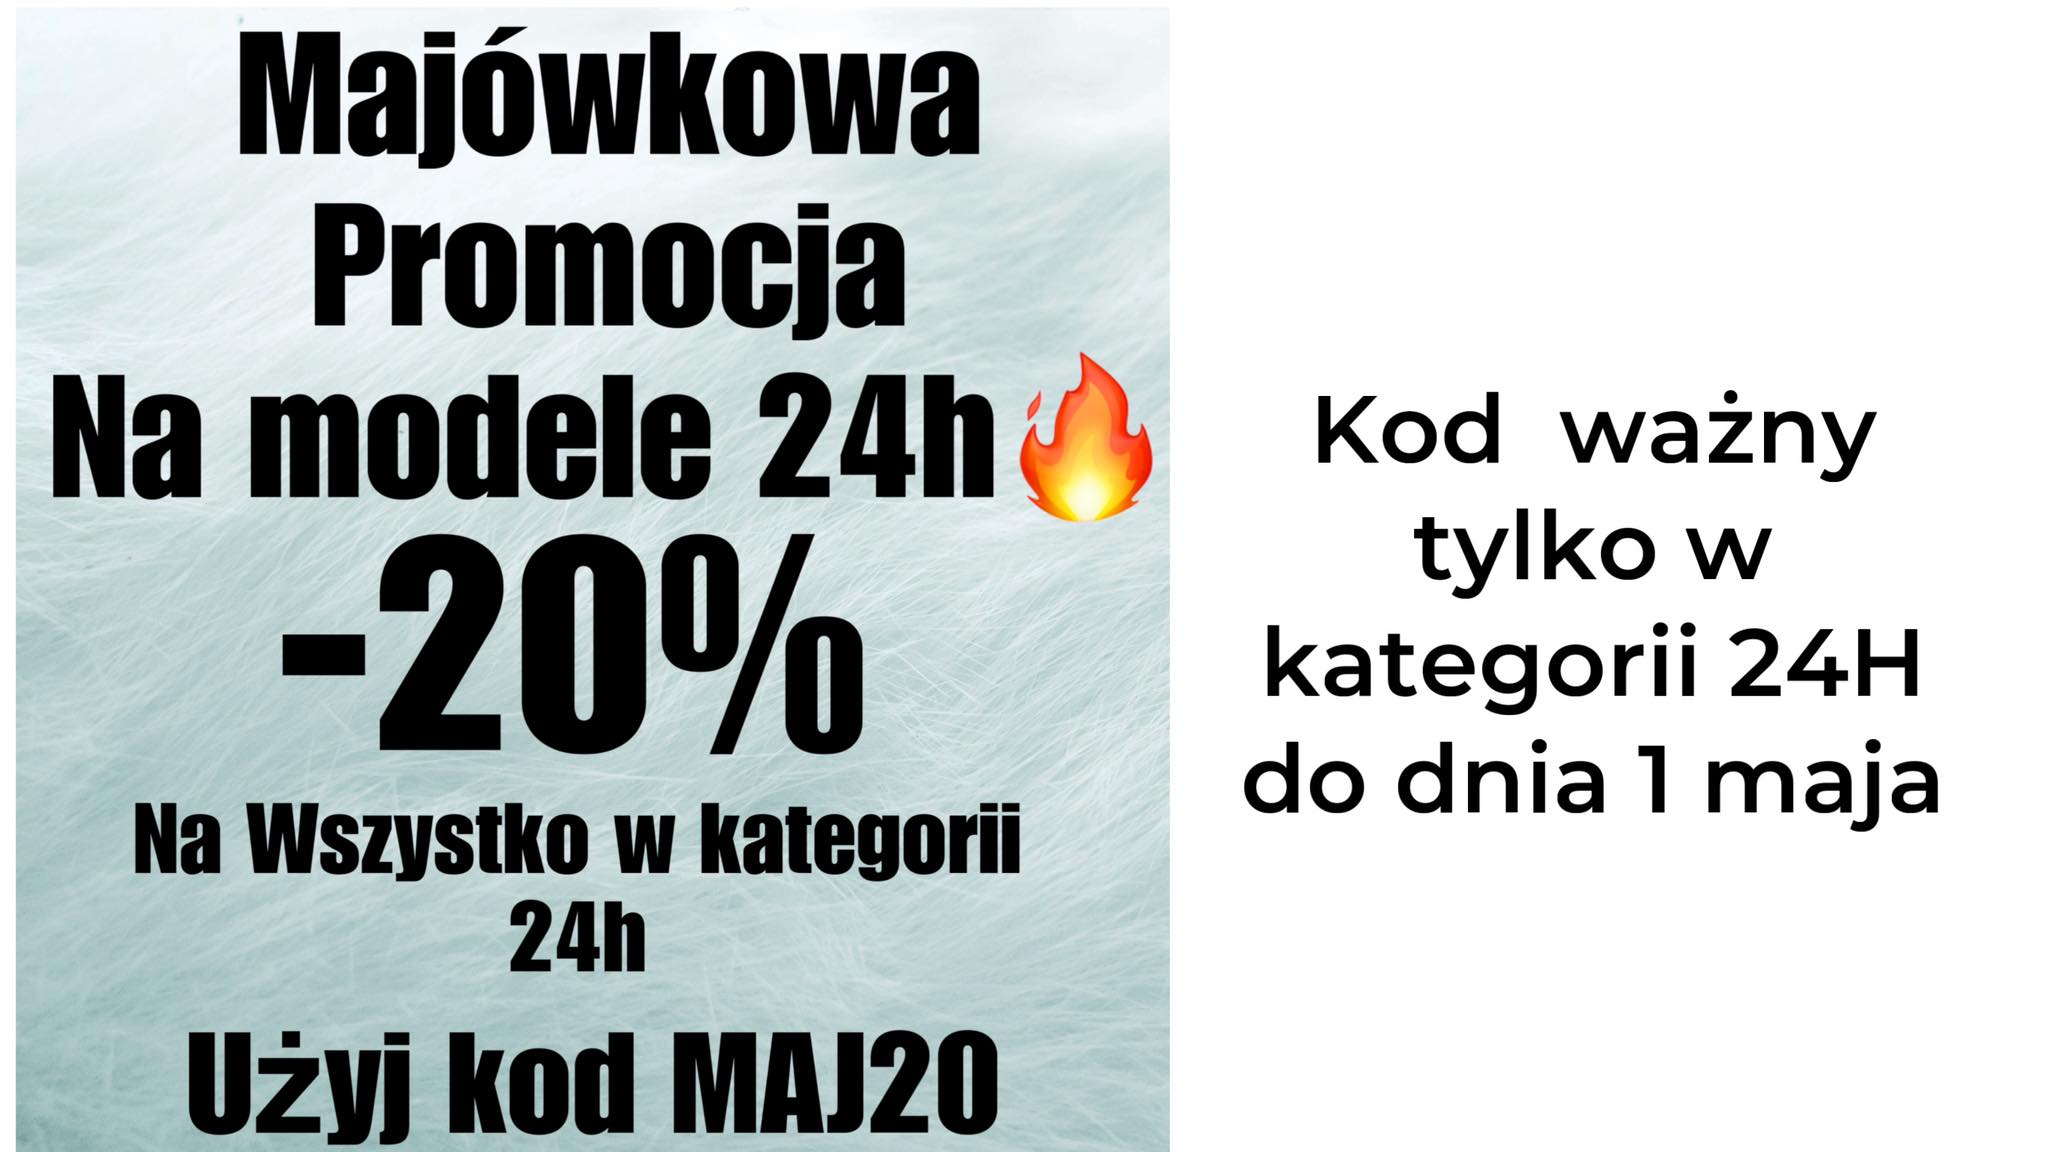 majowkowa_promo